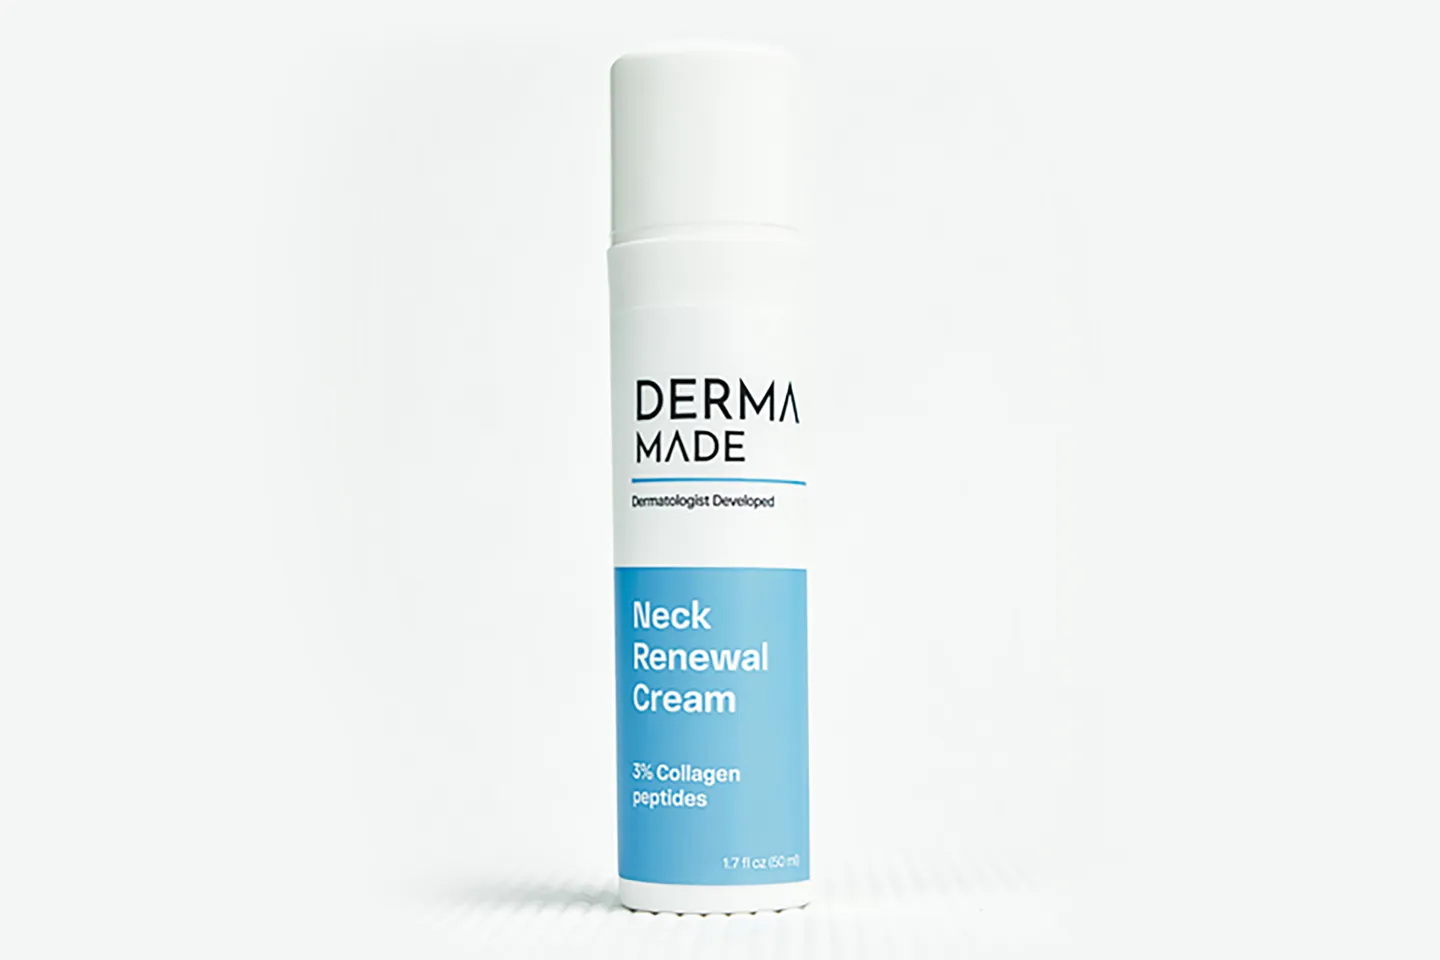 Neck Renewal Cream